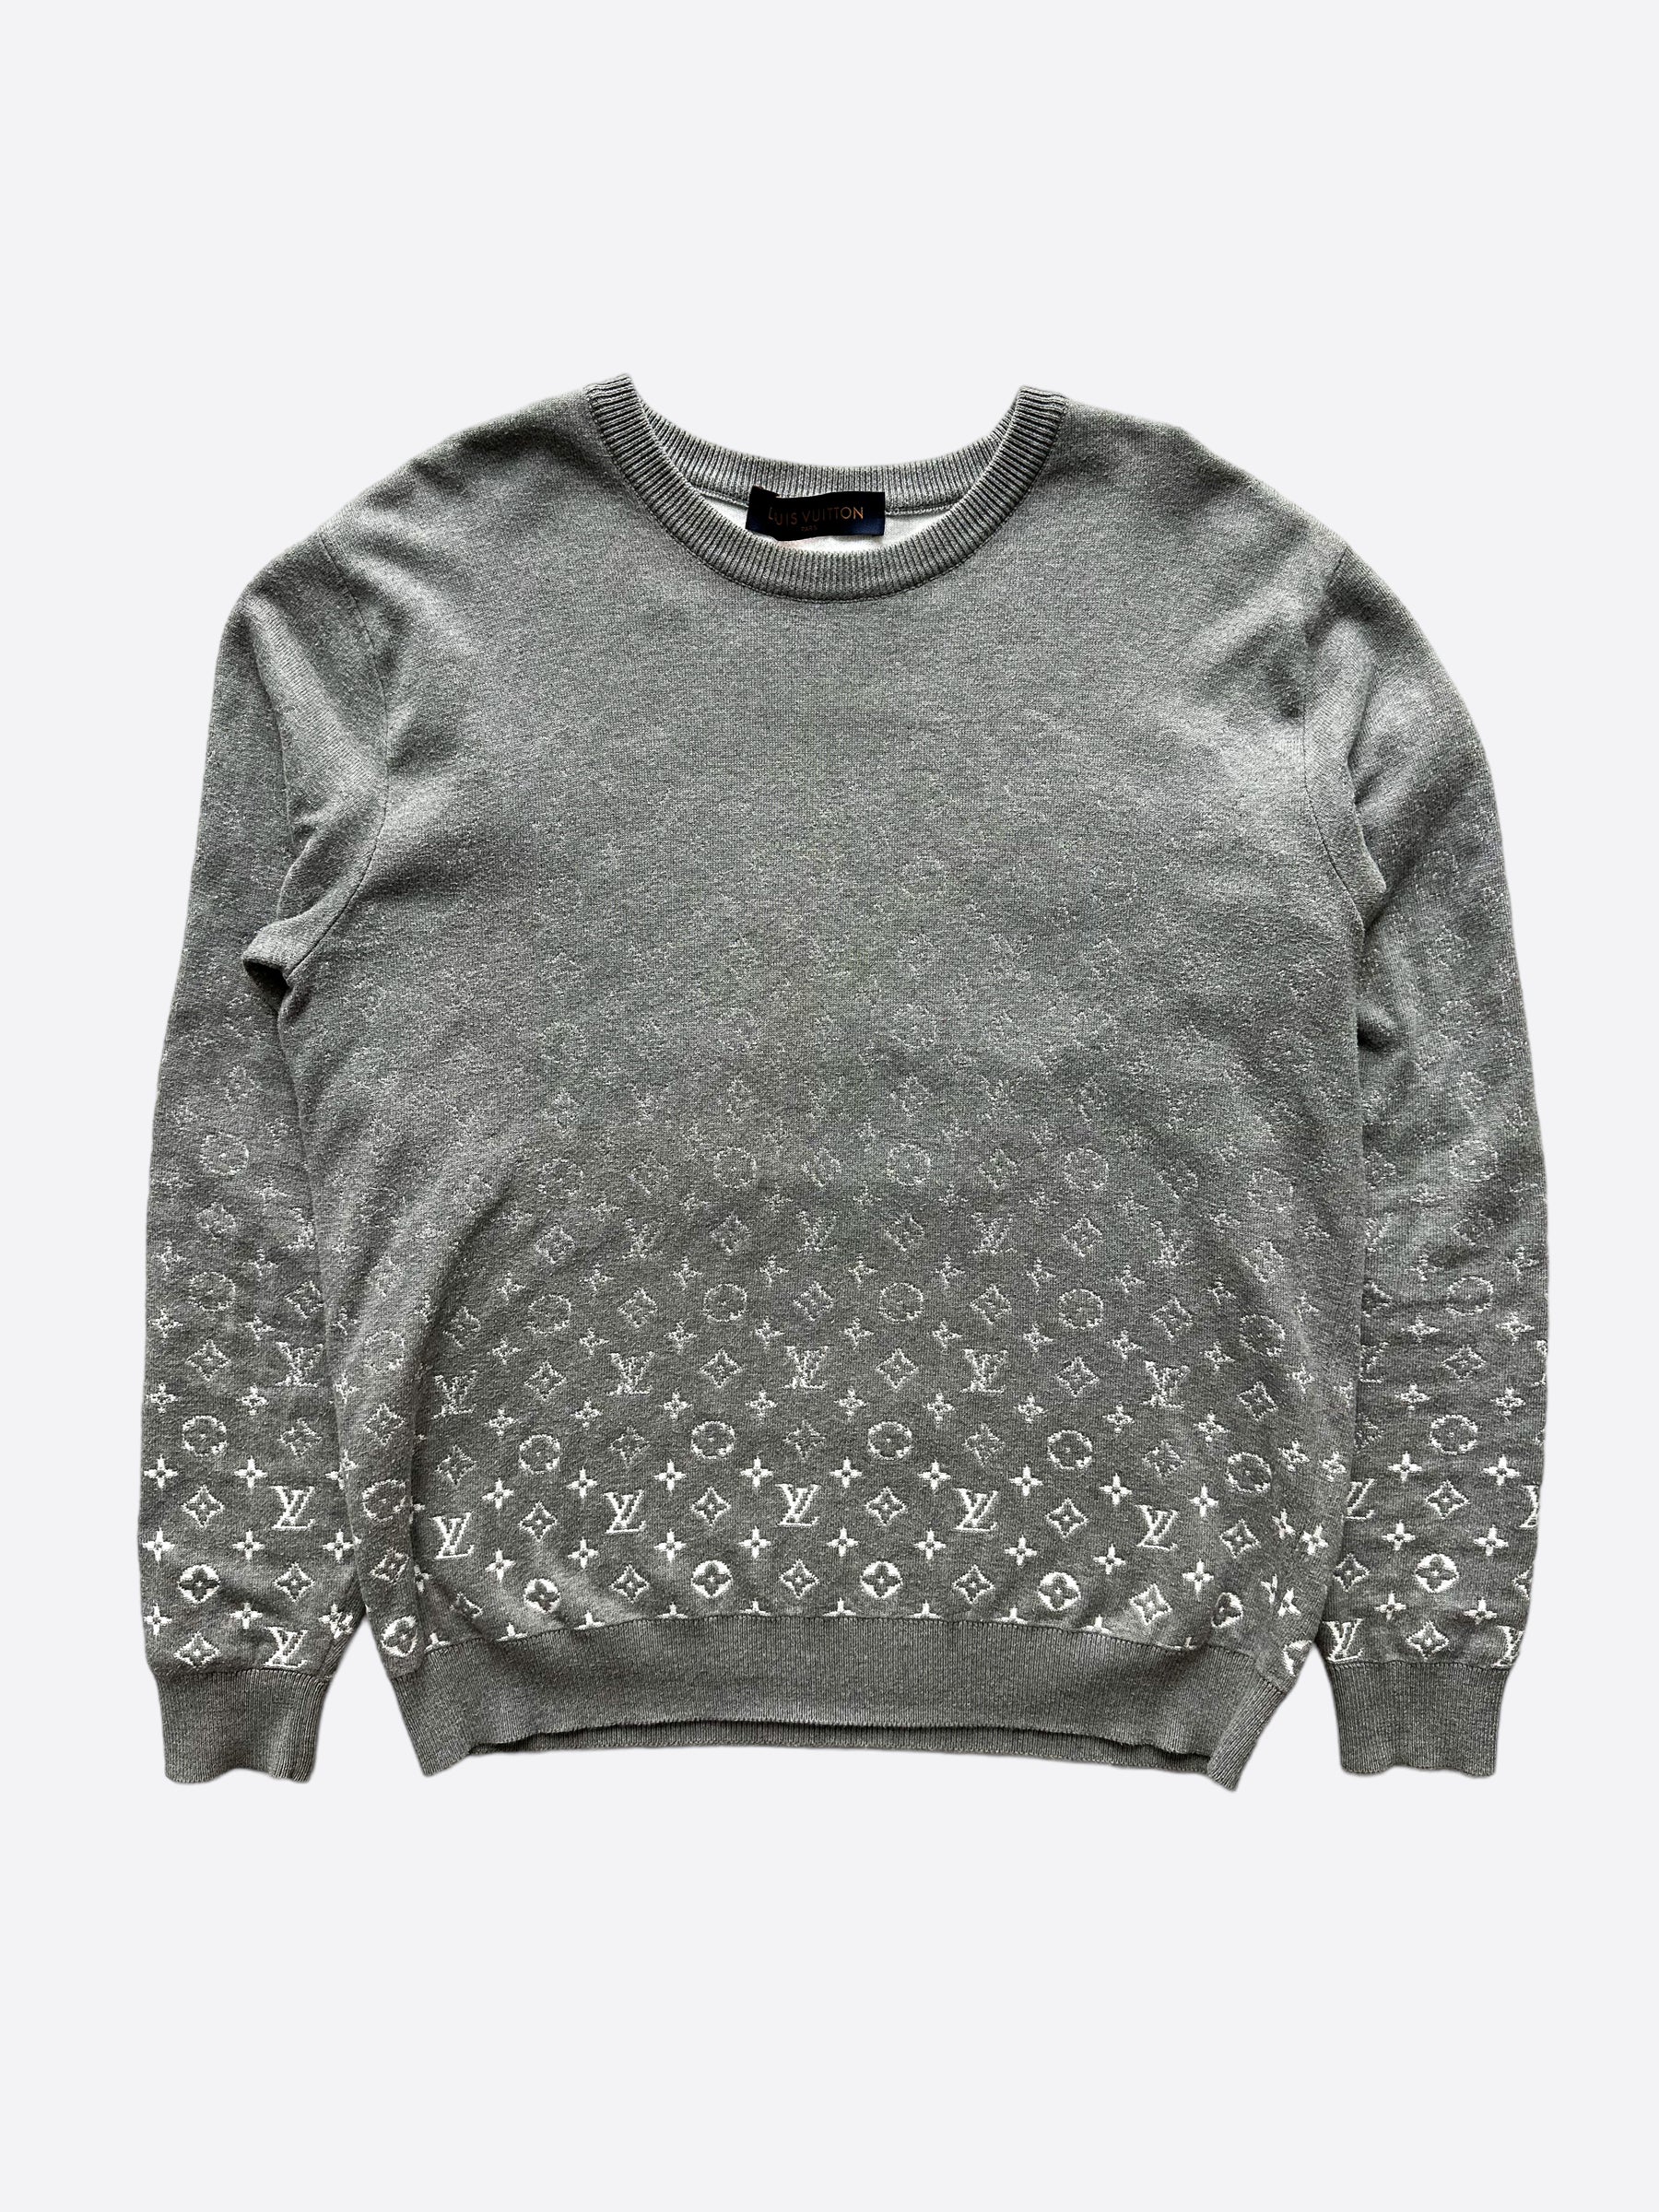 grey louis vuitton sweater